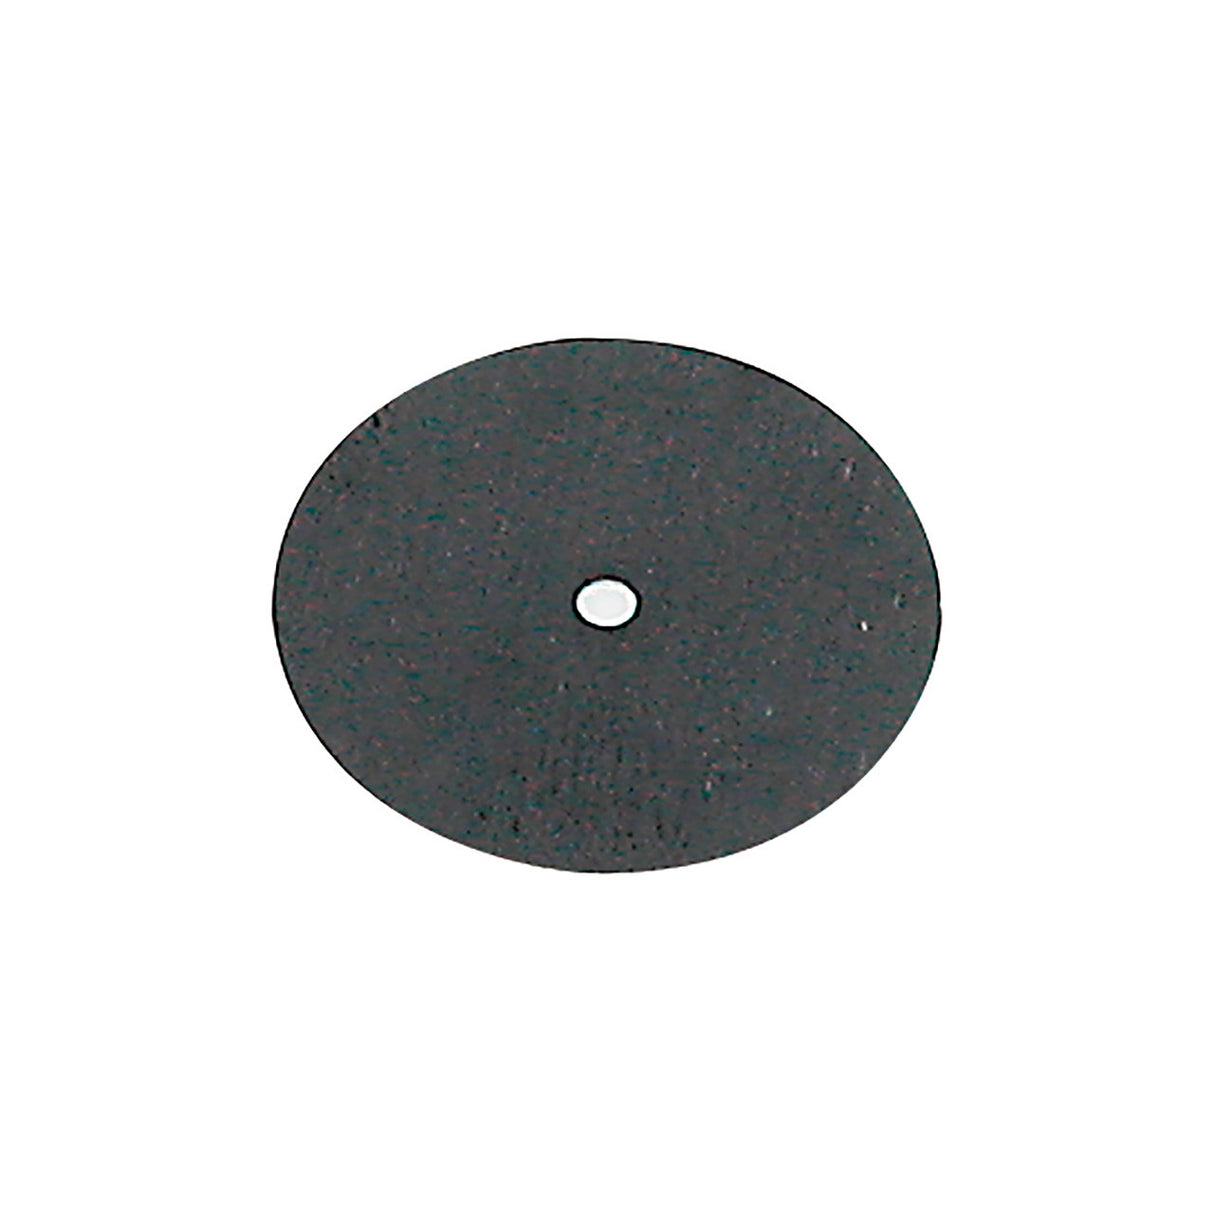 Dedeco® Ultra-Thin Separating Discs, 7/8"